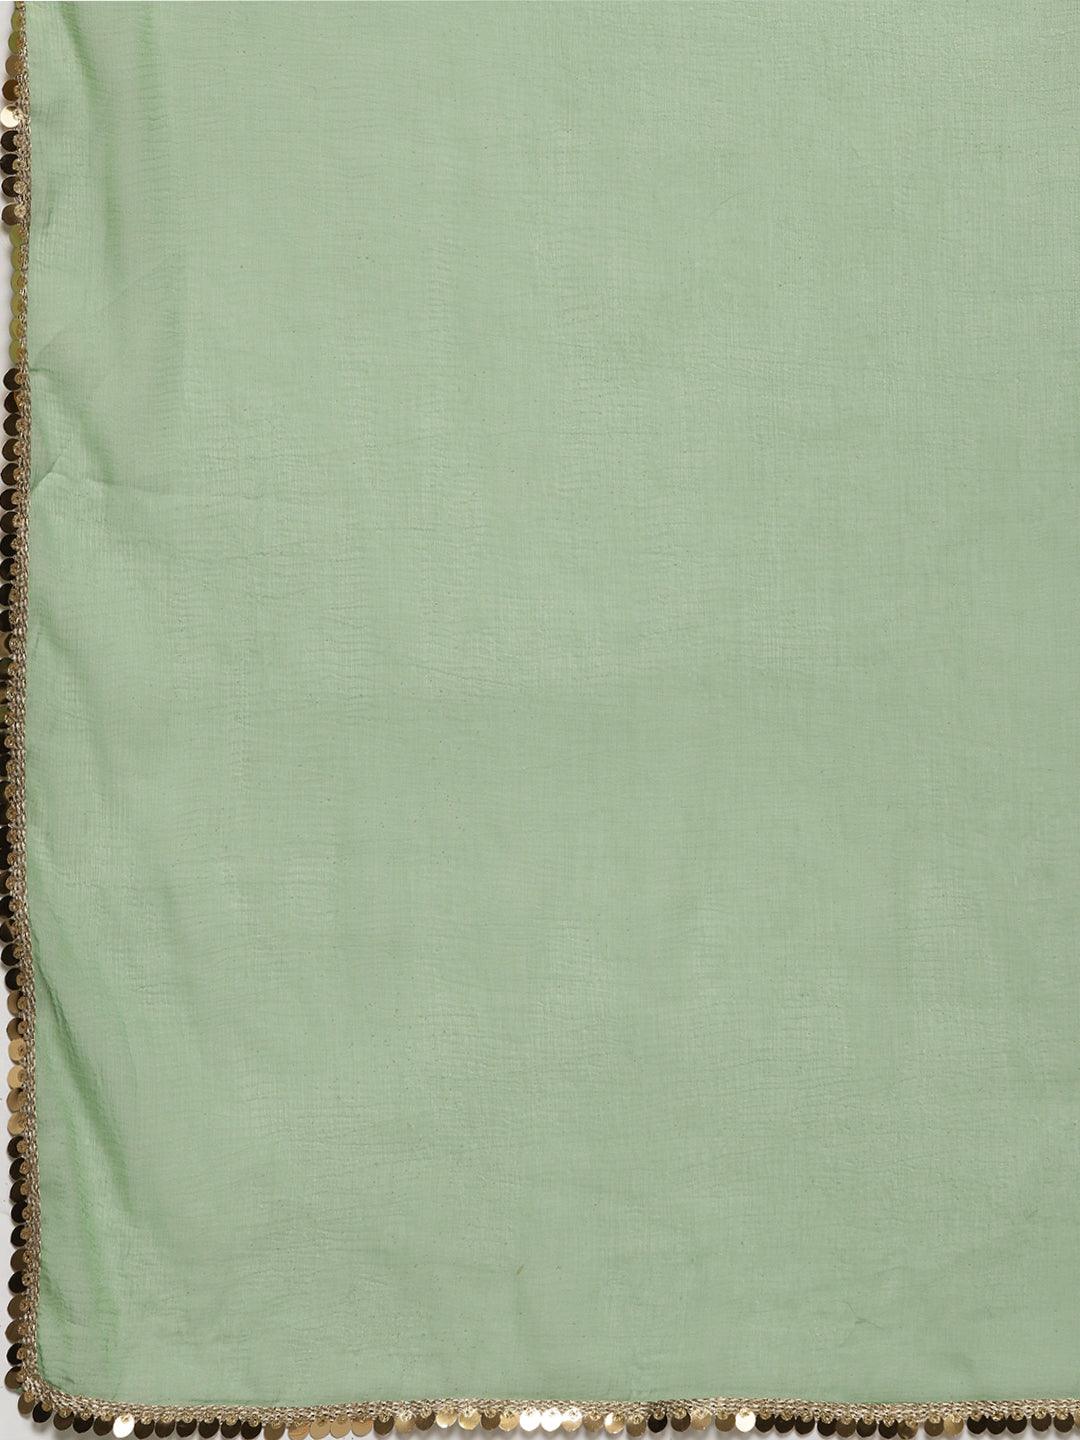 Green Printed Georgette A-Line Suit Set - Libas